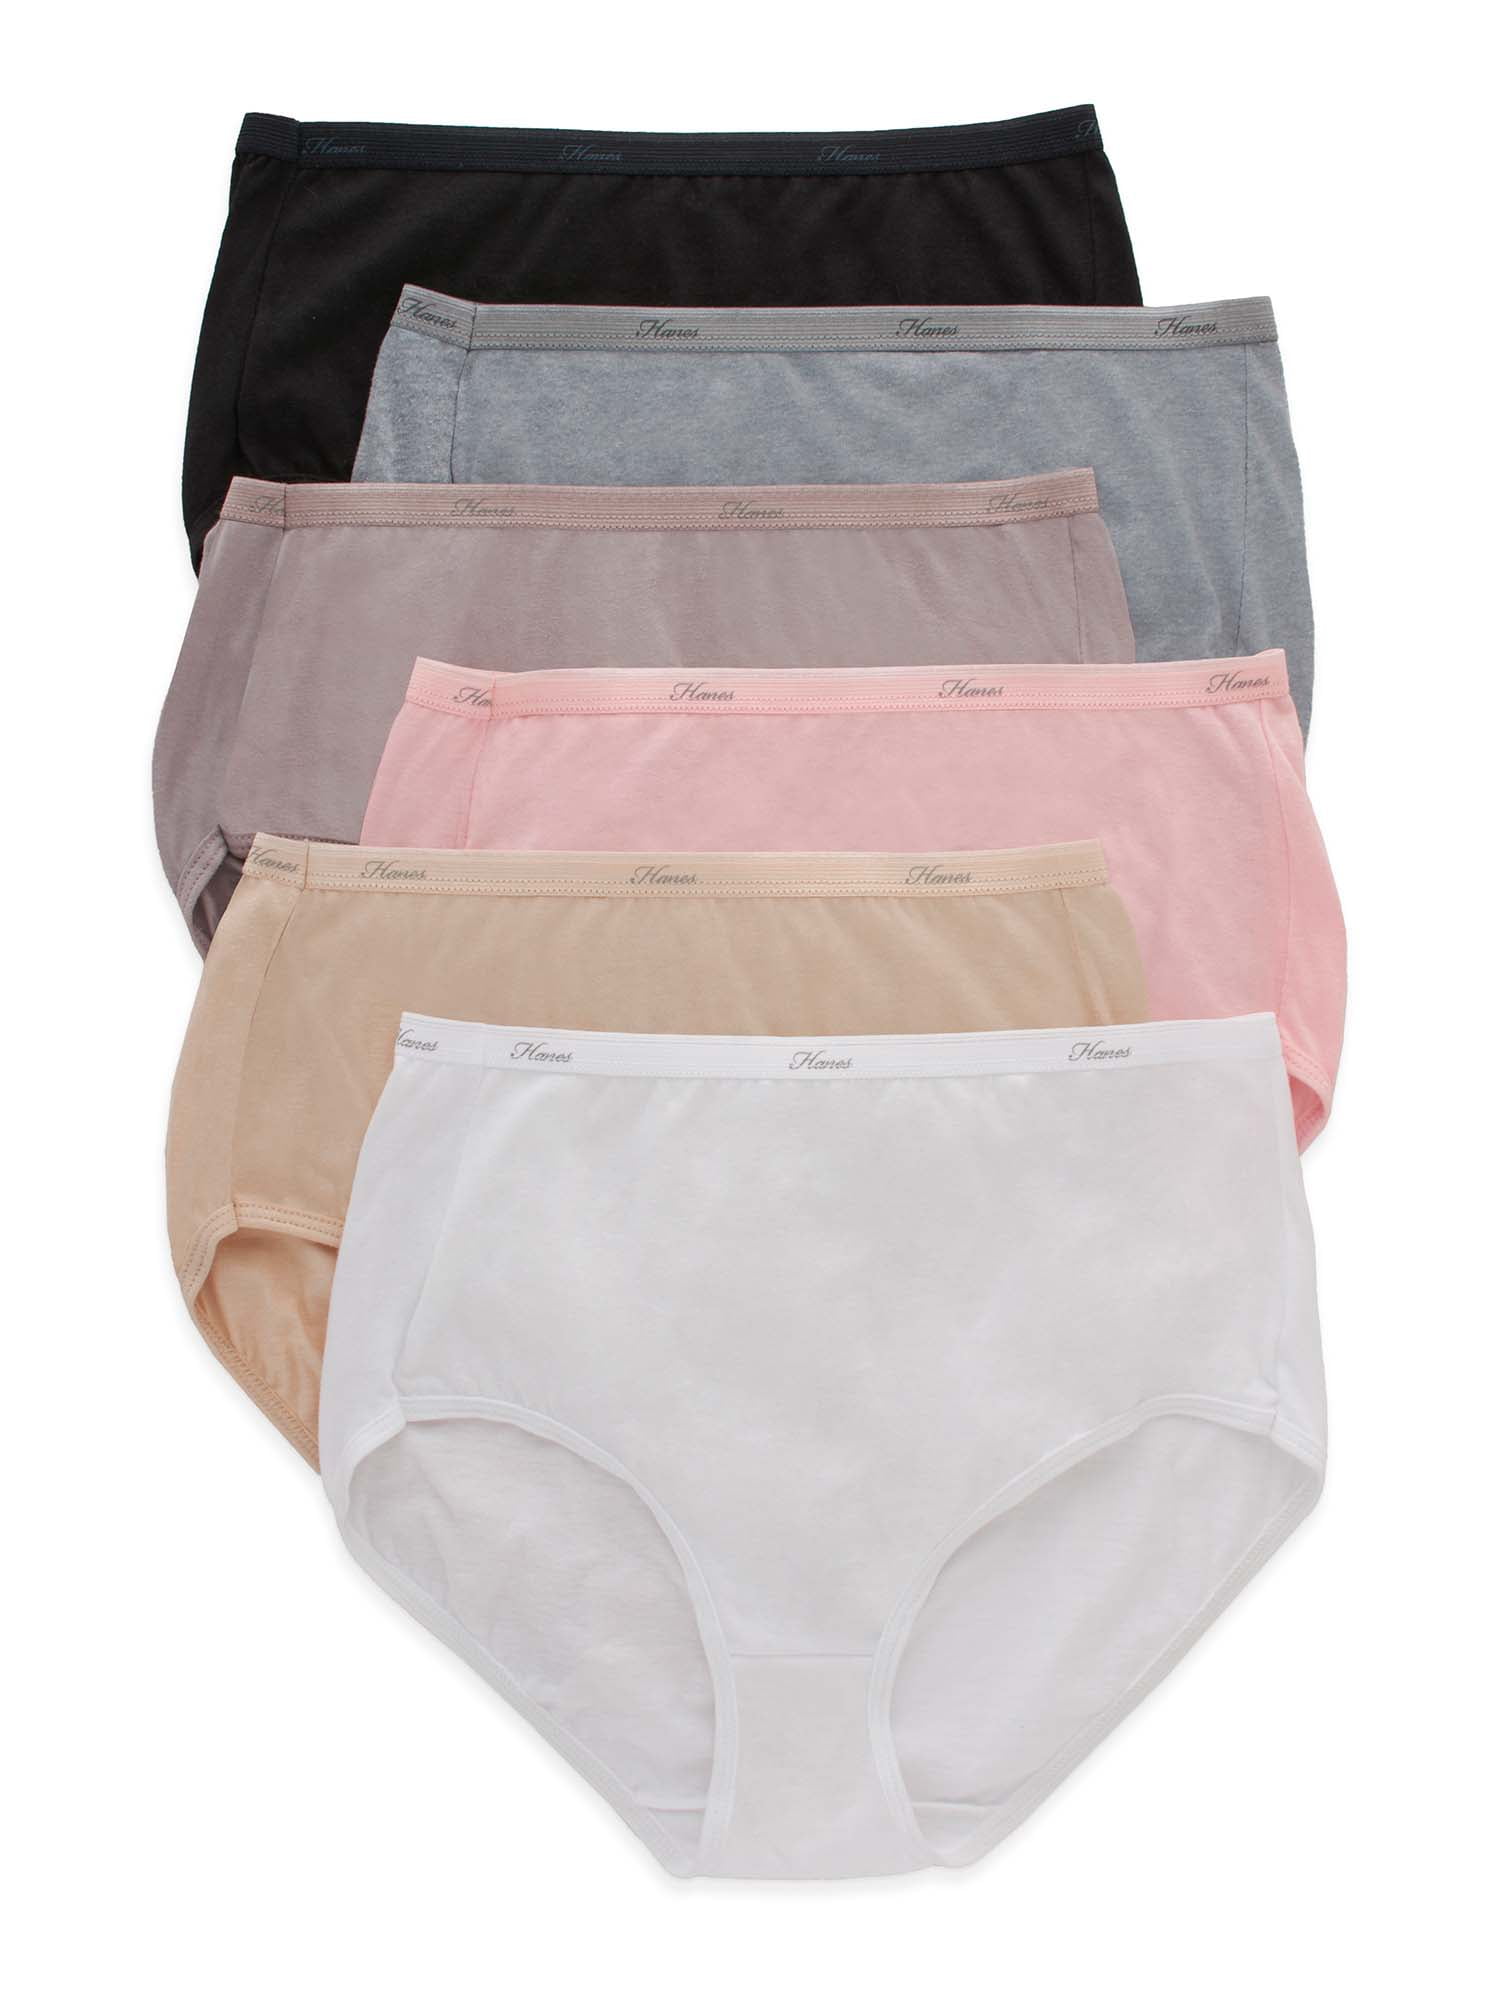 Hanes Women's Cotton Boy Brief Panties 6-Pack - P649SC 